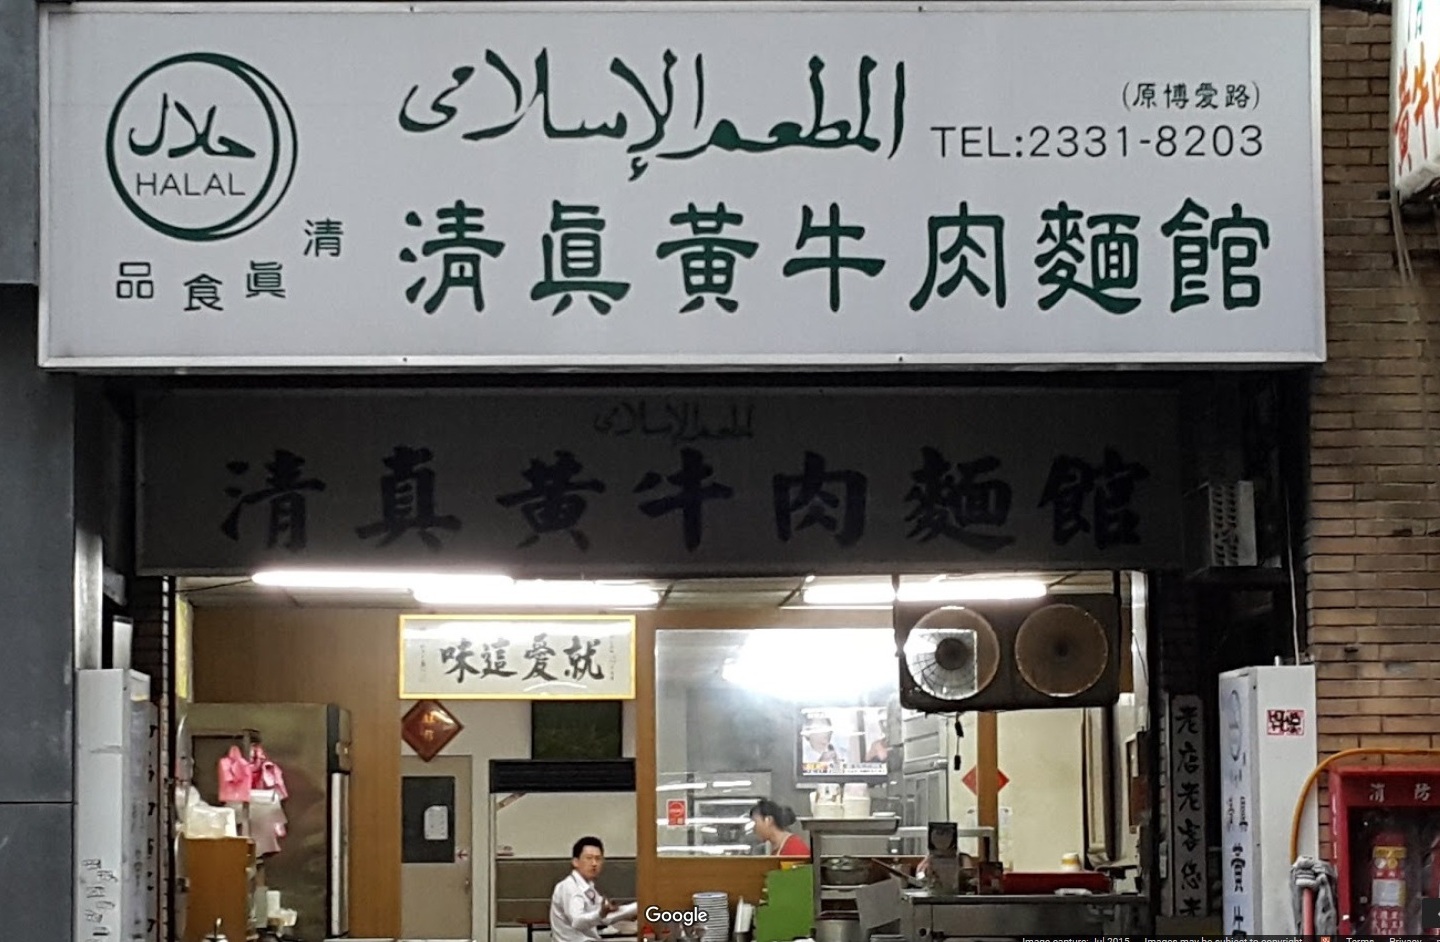 7 Best Halal Food Restaurants in Taipei